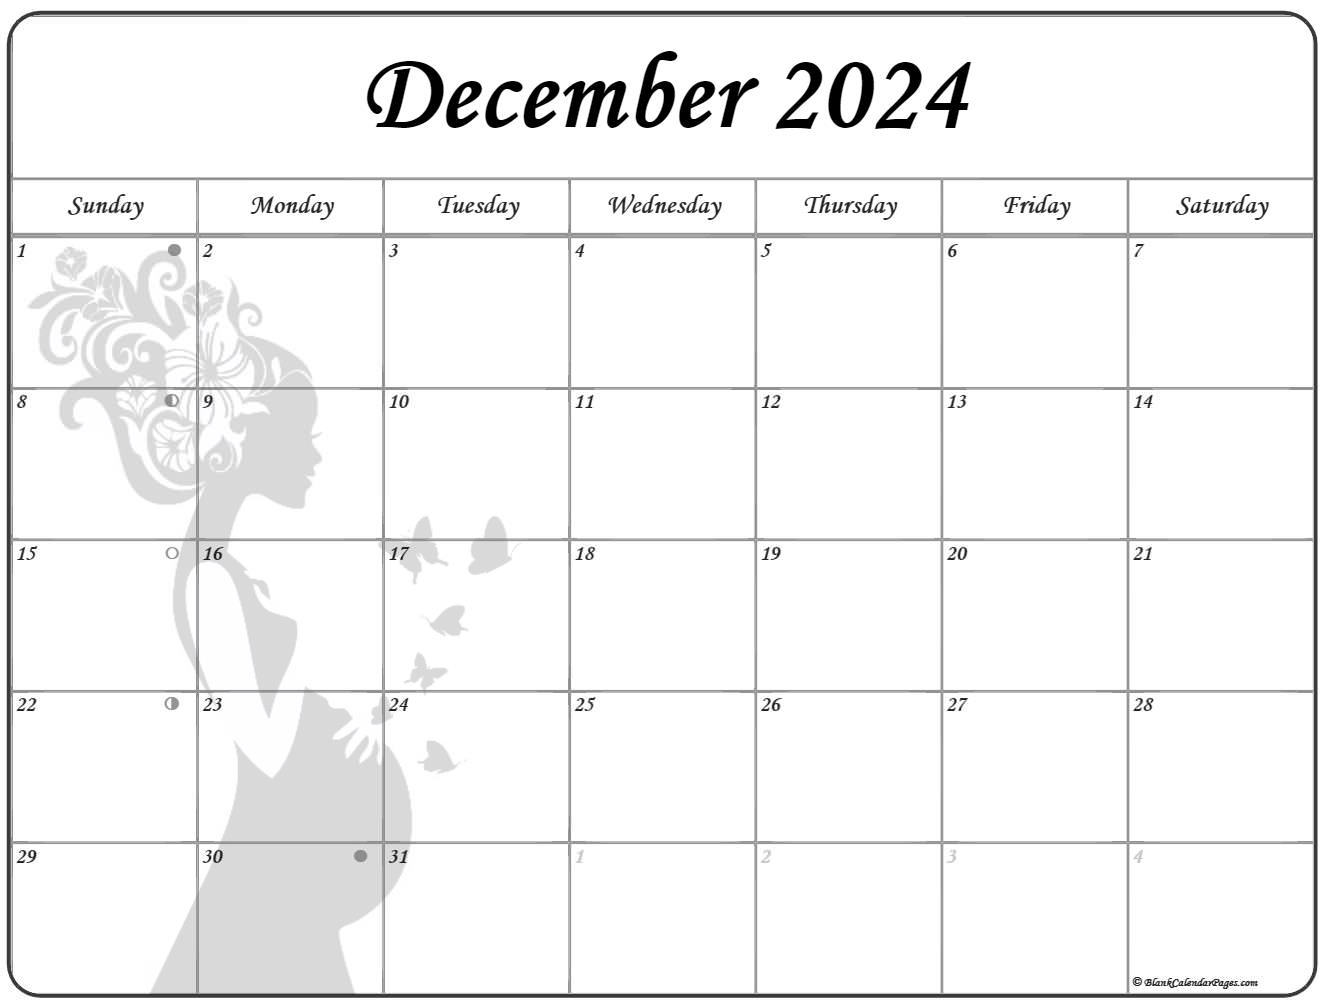 December 2021 Pregnancy Calendar | Fertility Calendar